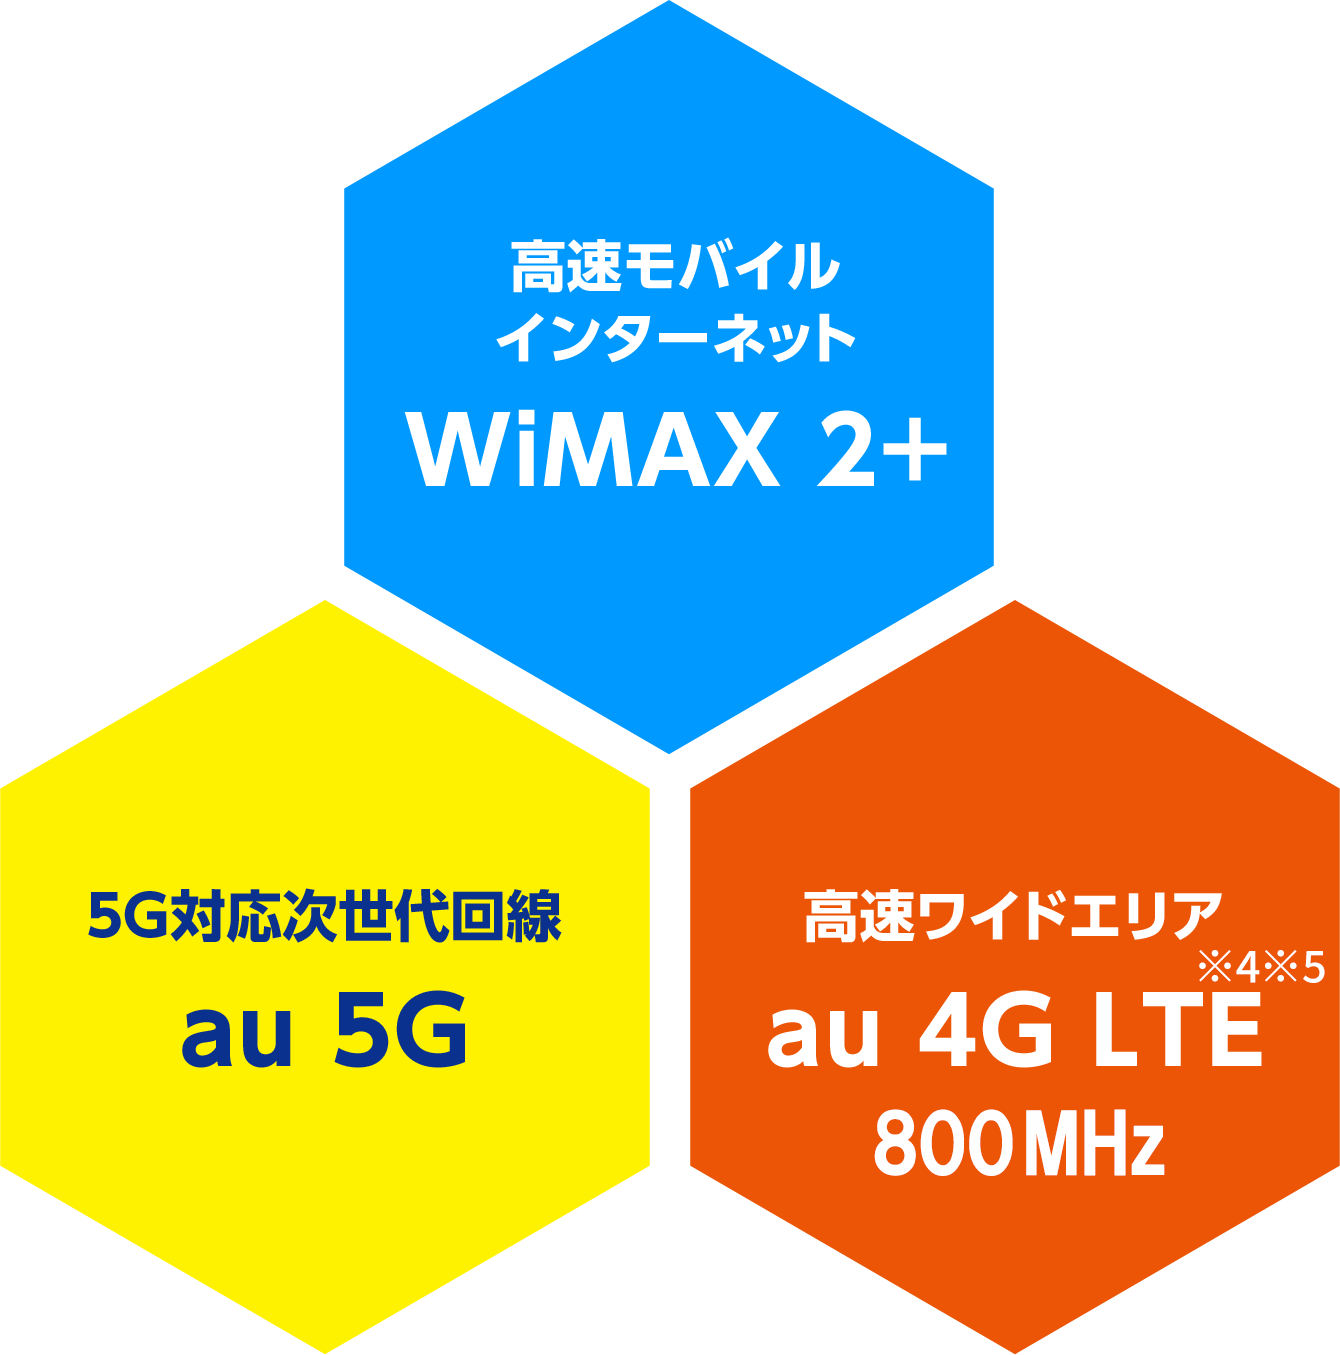 WiMAX 2+ 高速モバイルインターネット au 5G 5G対応次世代回線 au 4G LTE※4※5 800MHz 高速ワイドエリア